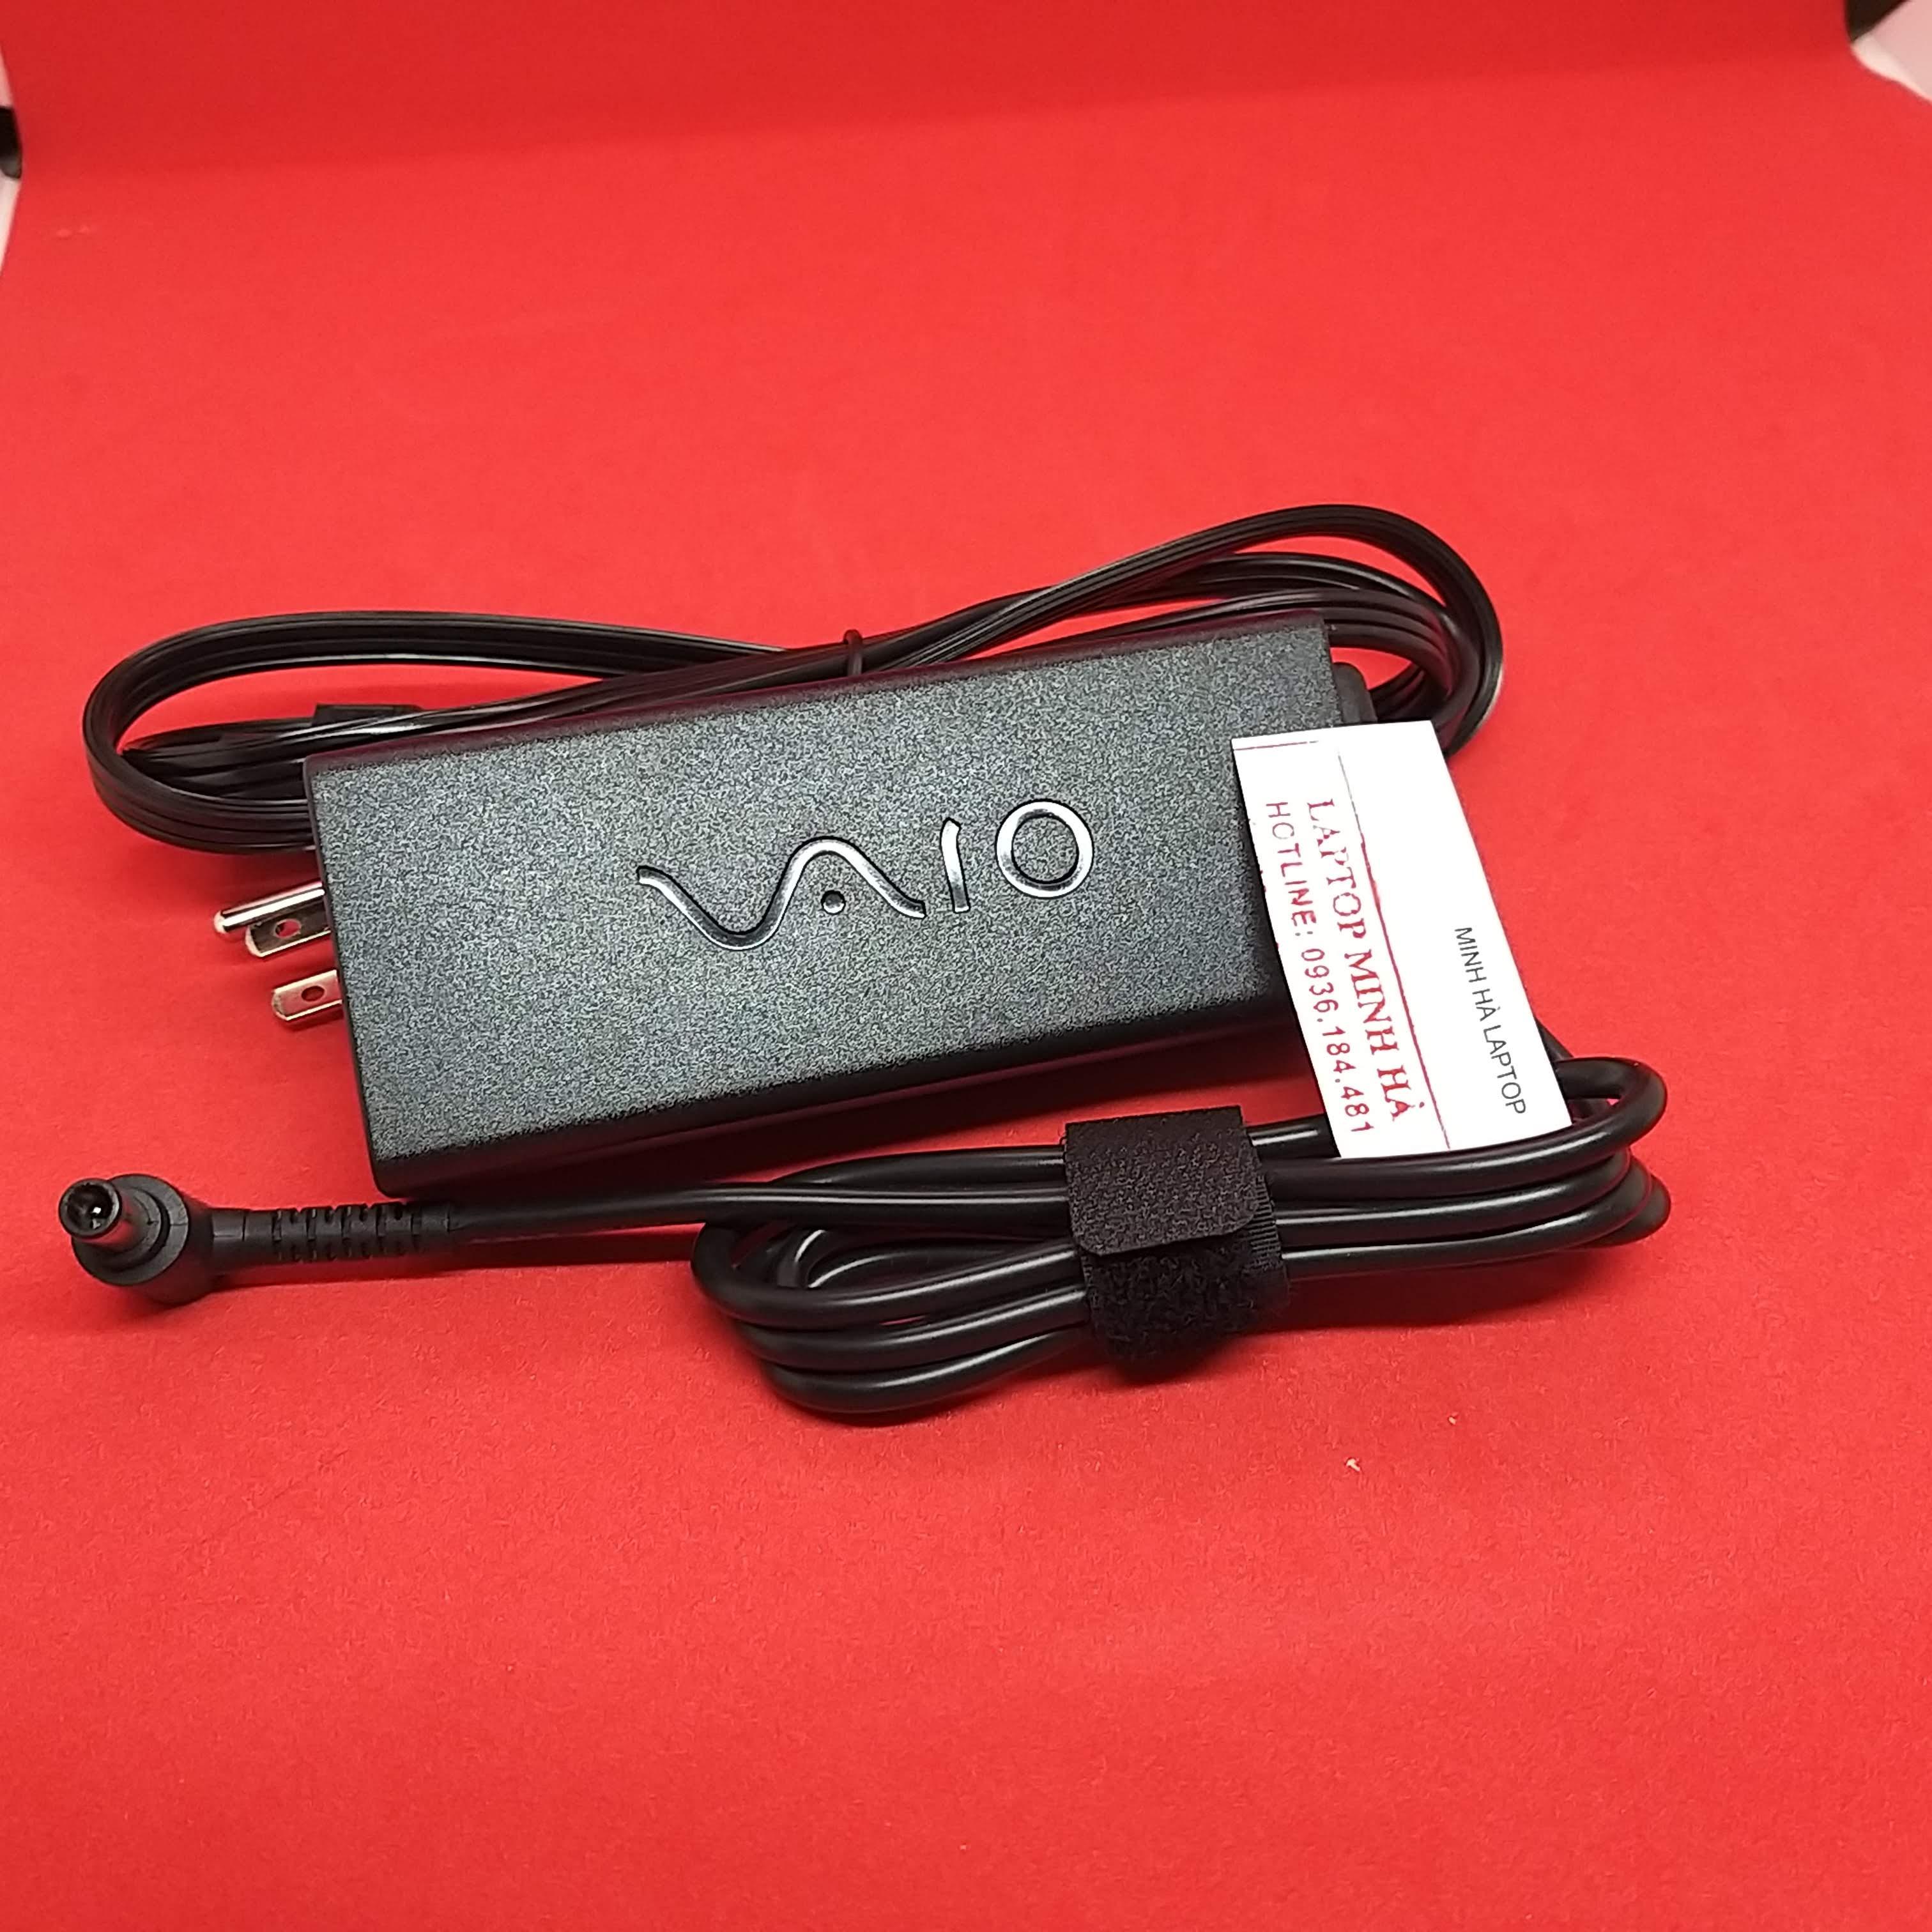 Sạc dùng cho Tivi Sony Bravia 19.5V Ac Adapter, Sạc dùng cho Tivi Sony Bravia 19.5V Ac Adapter